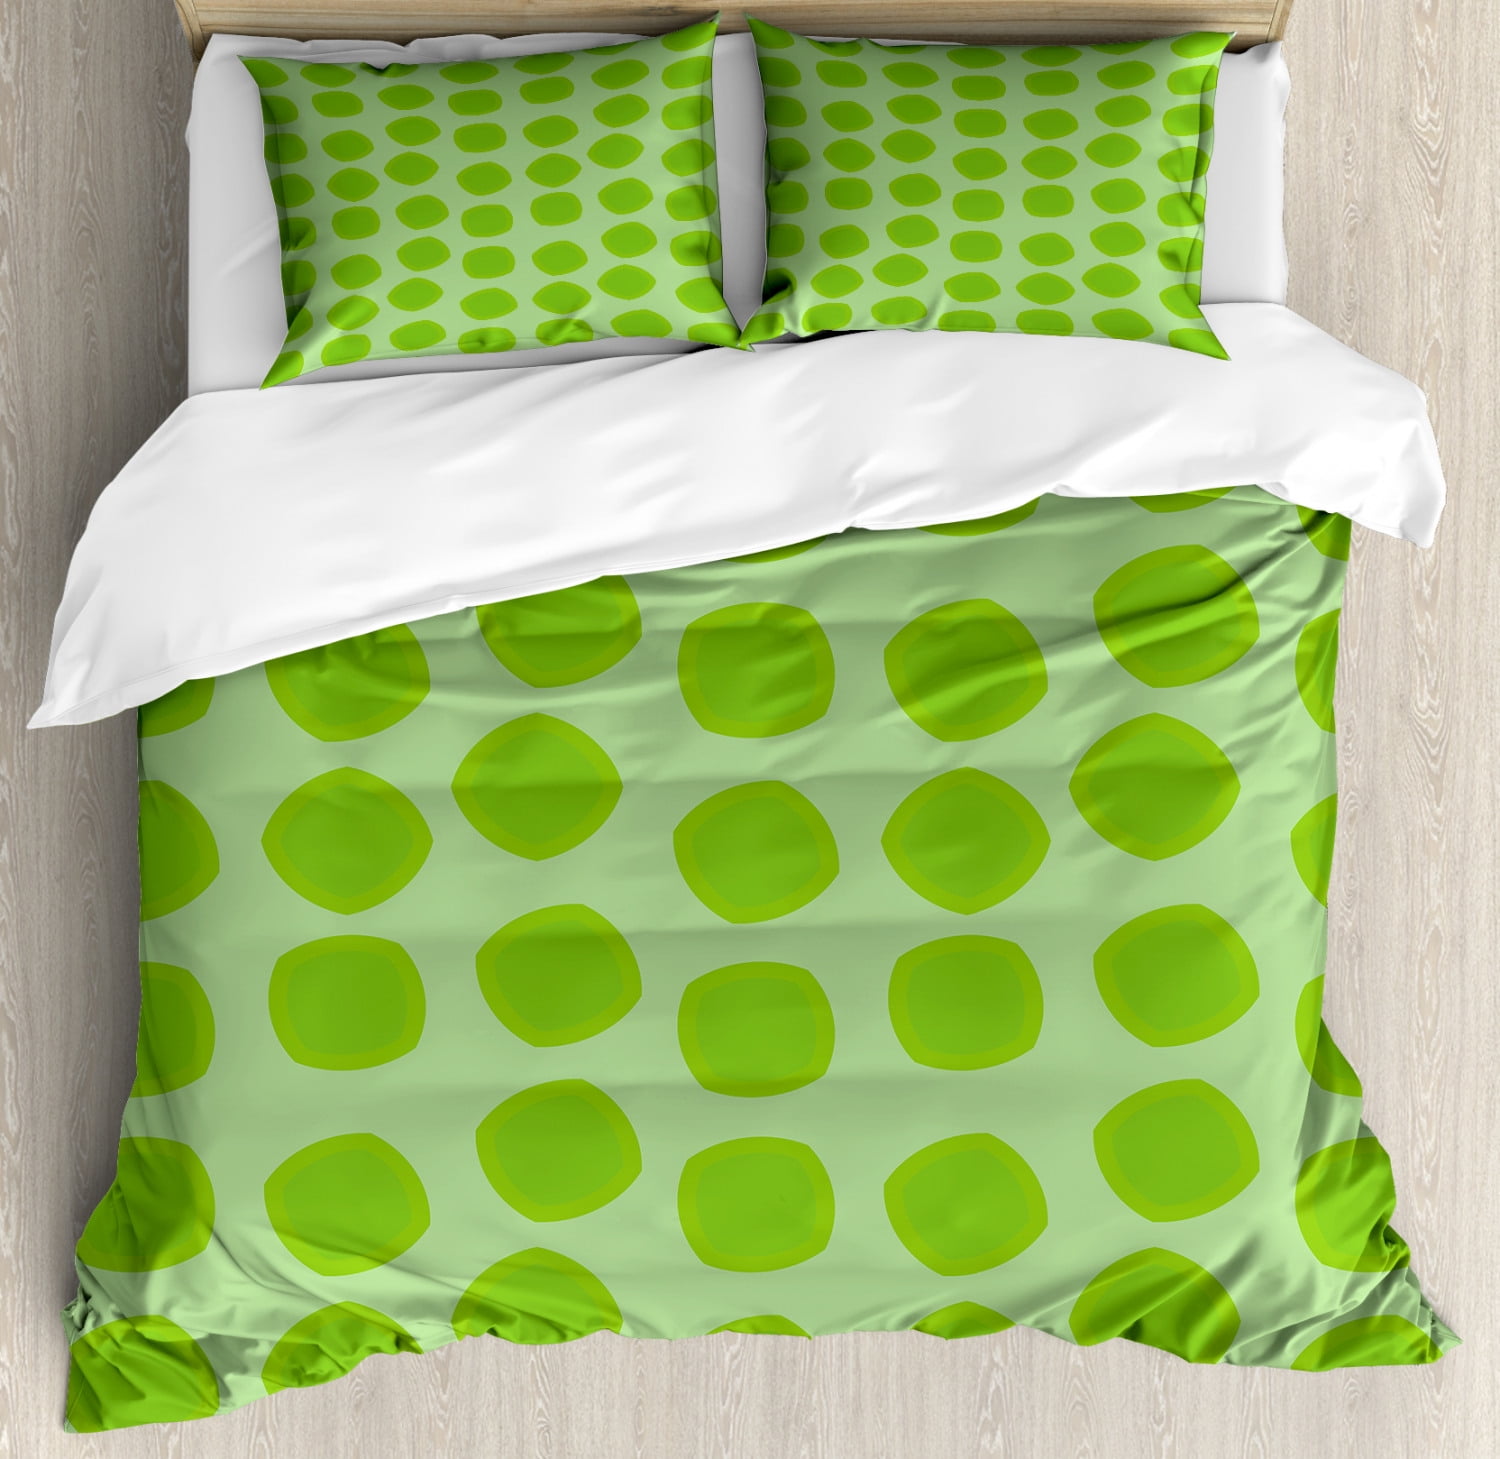 Lime Green Duvet Cover Set Simplistic Formless Geometric Shapes